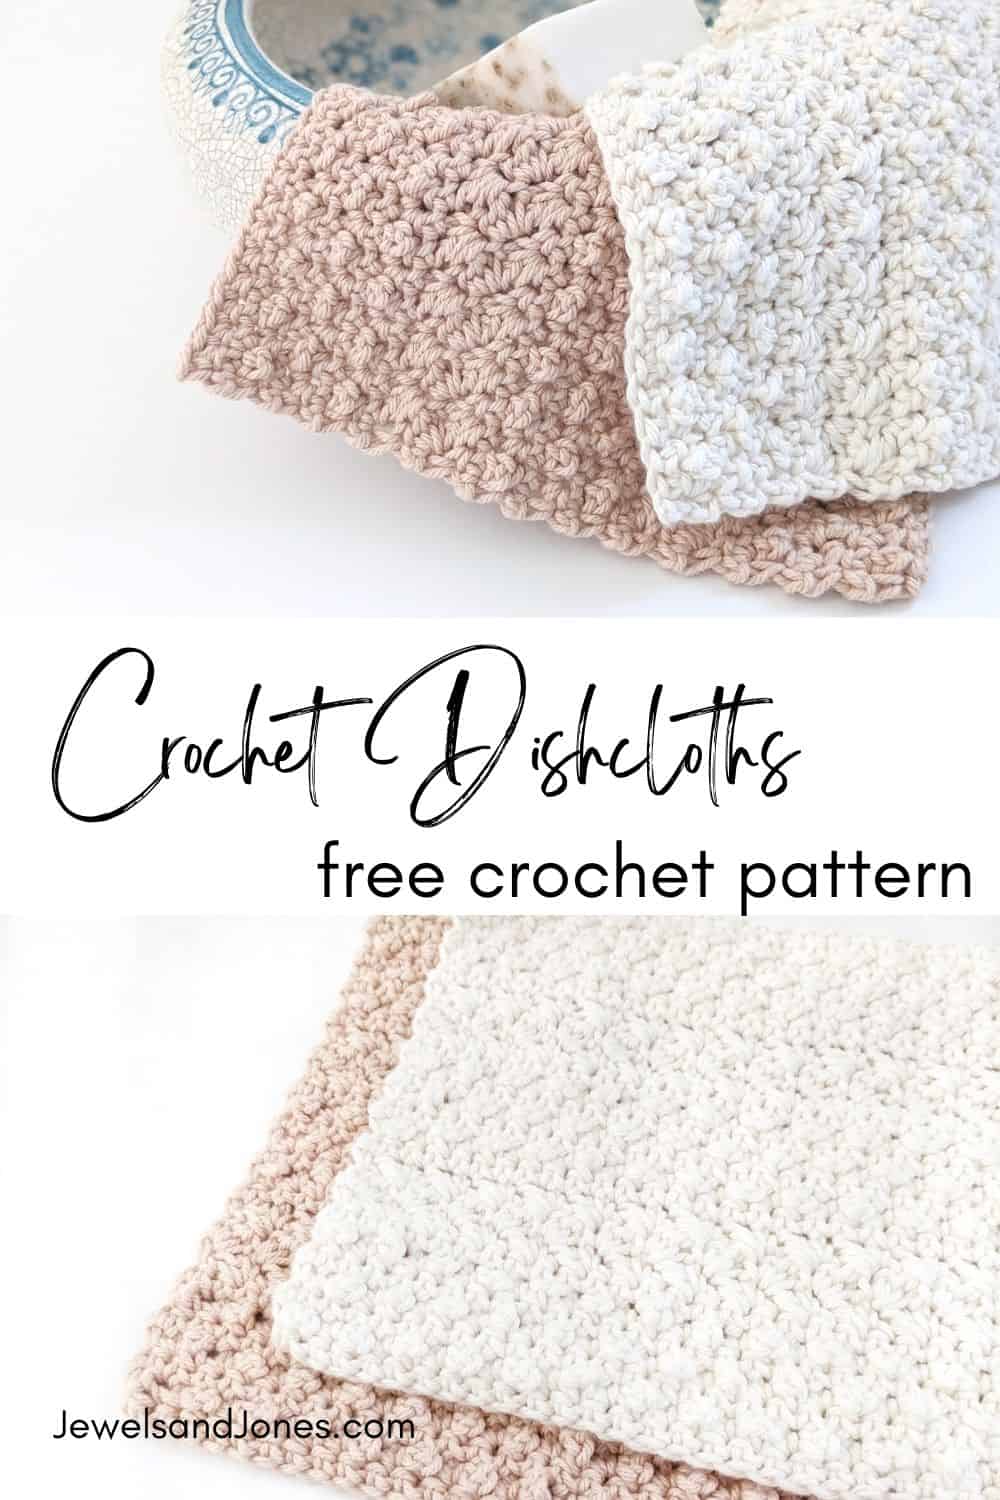 Pinnable image for rustic crochet dishcloths